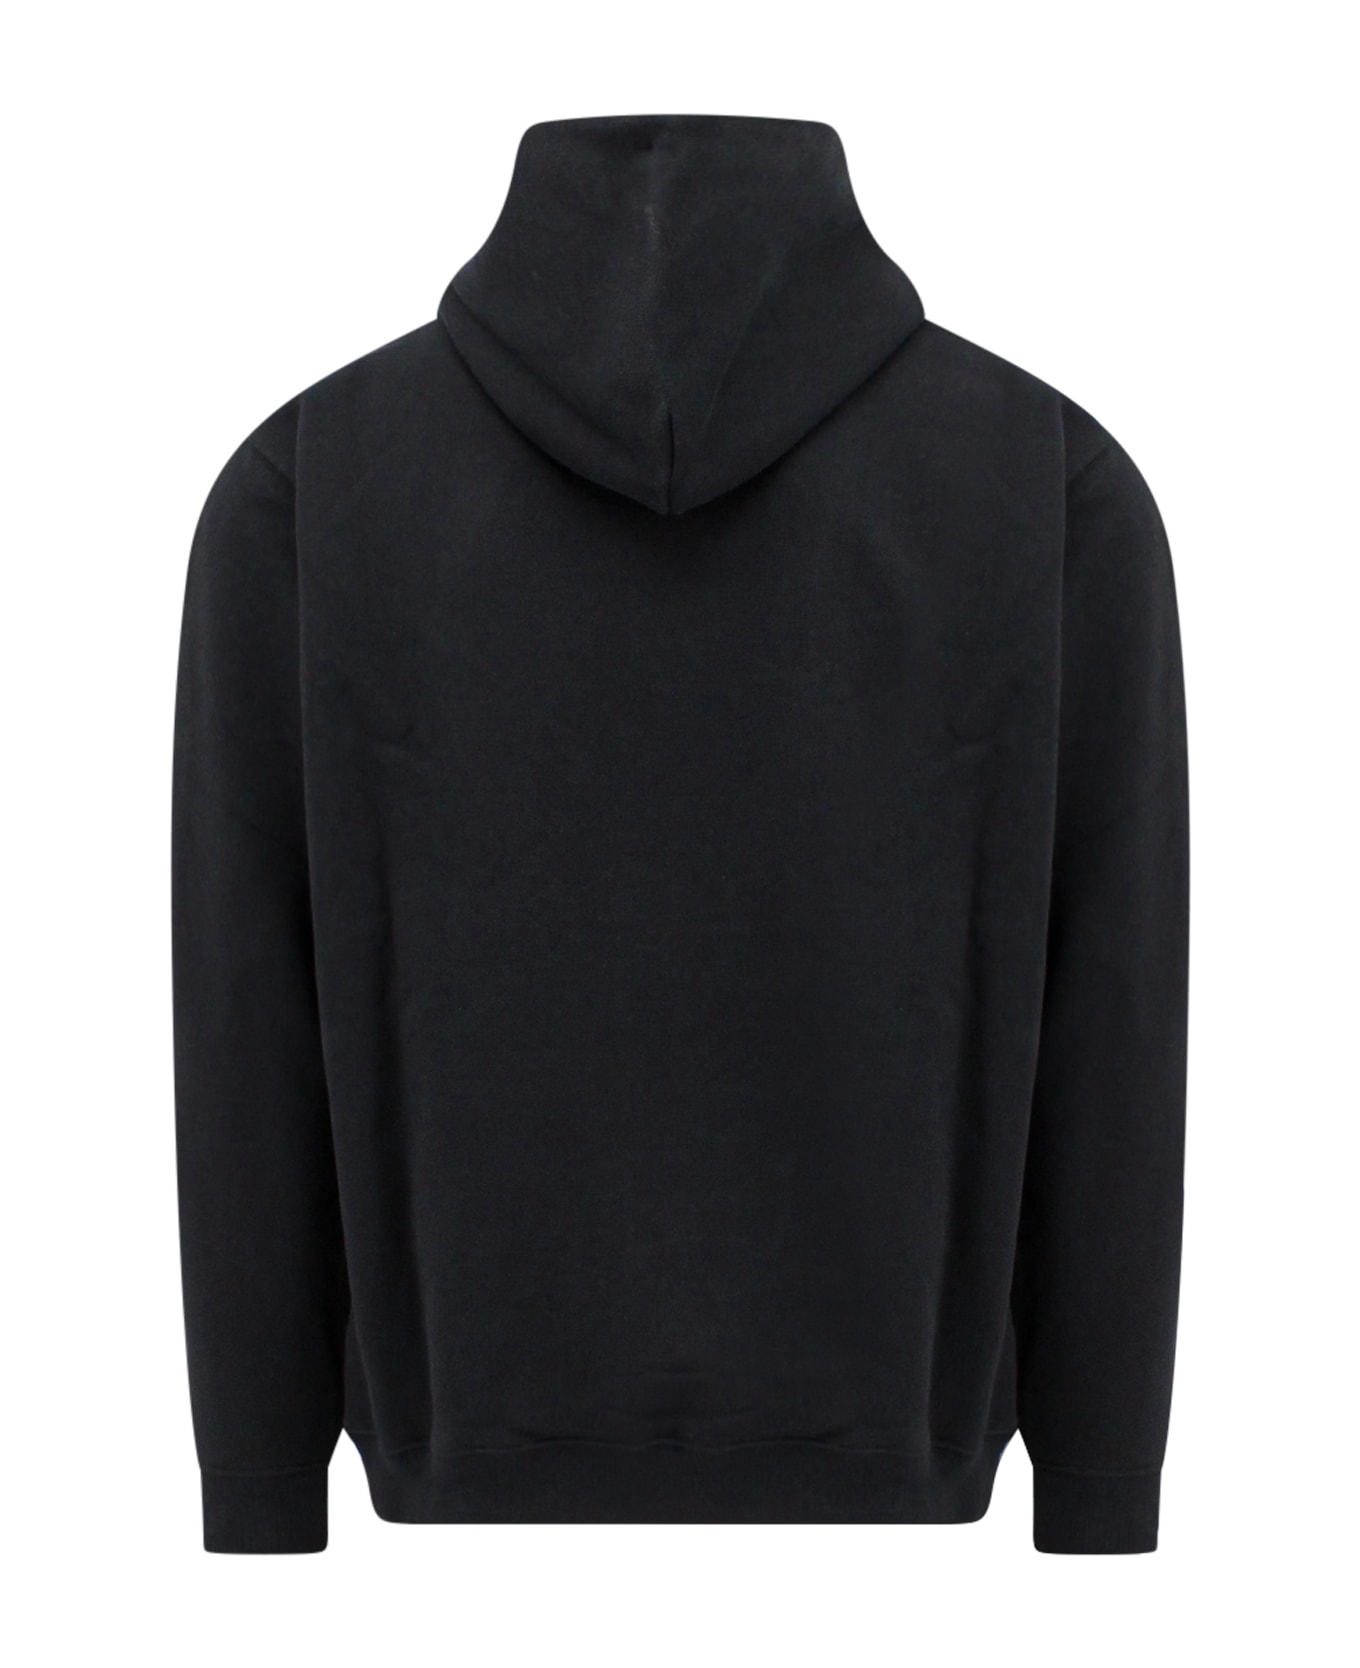 VTMNTS Sweatshirt - Black